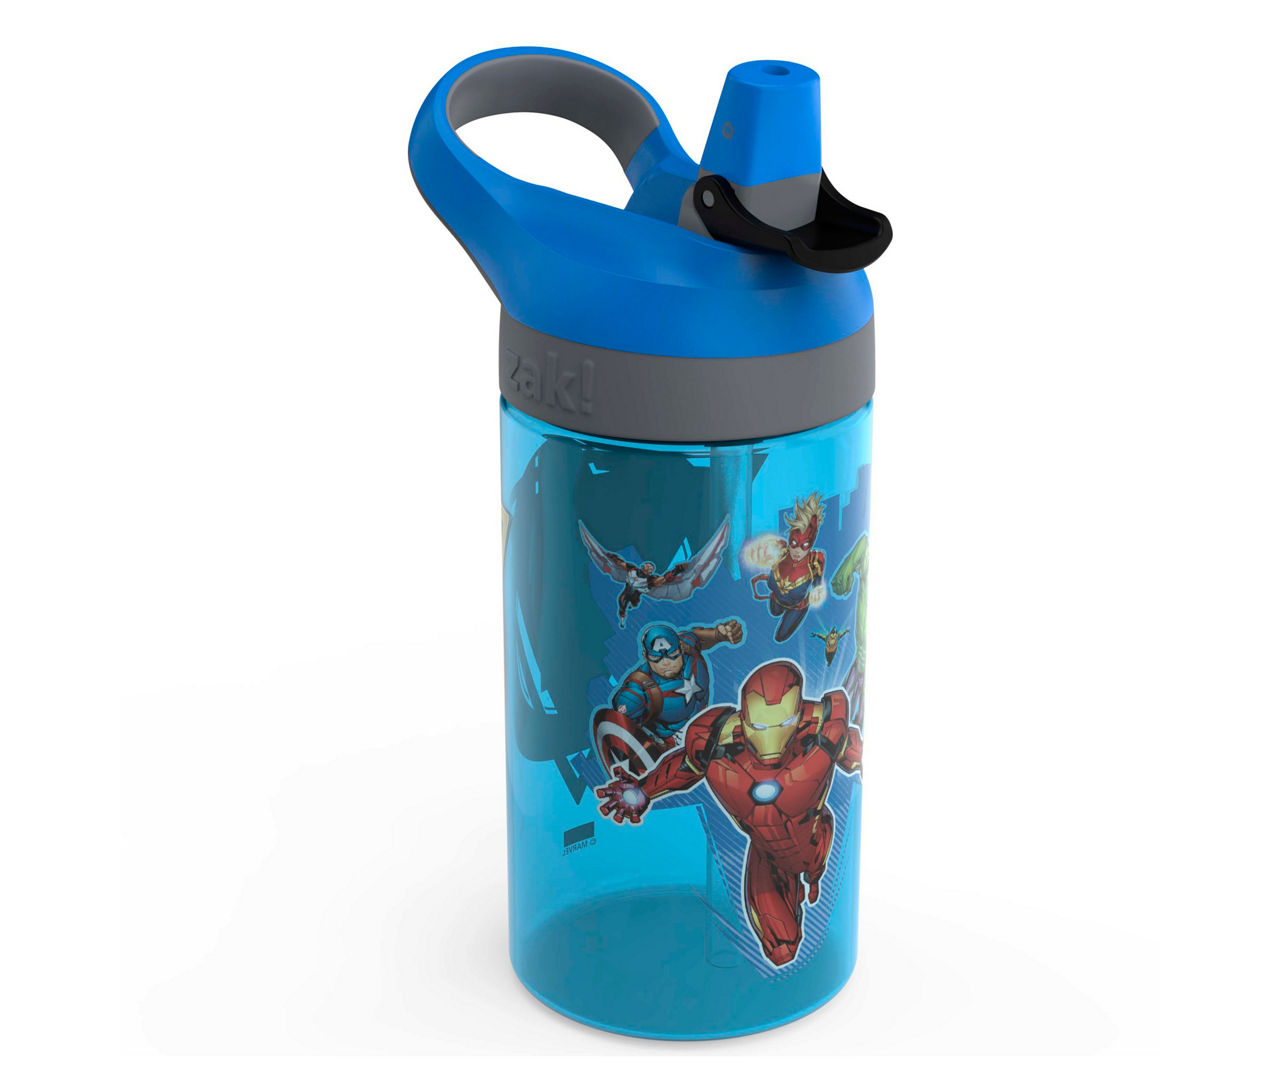 Spider-Man Atlantic Red Spout Water Bottle, 16 oz.